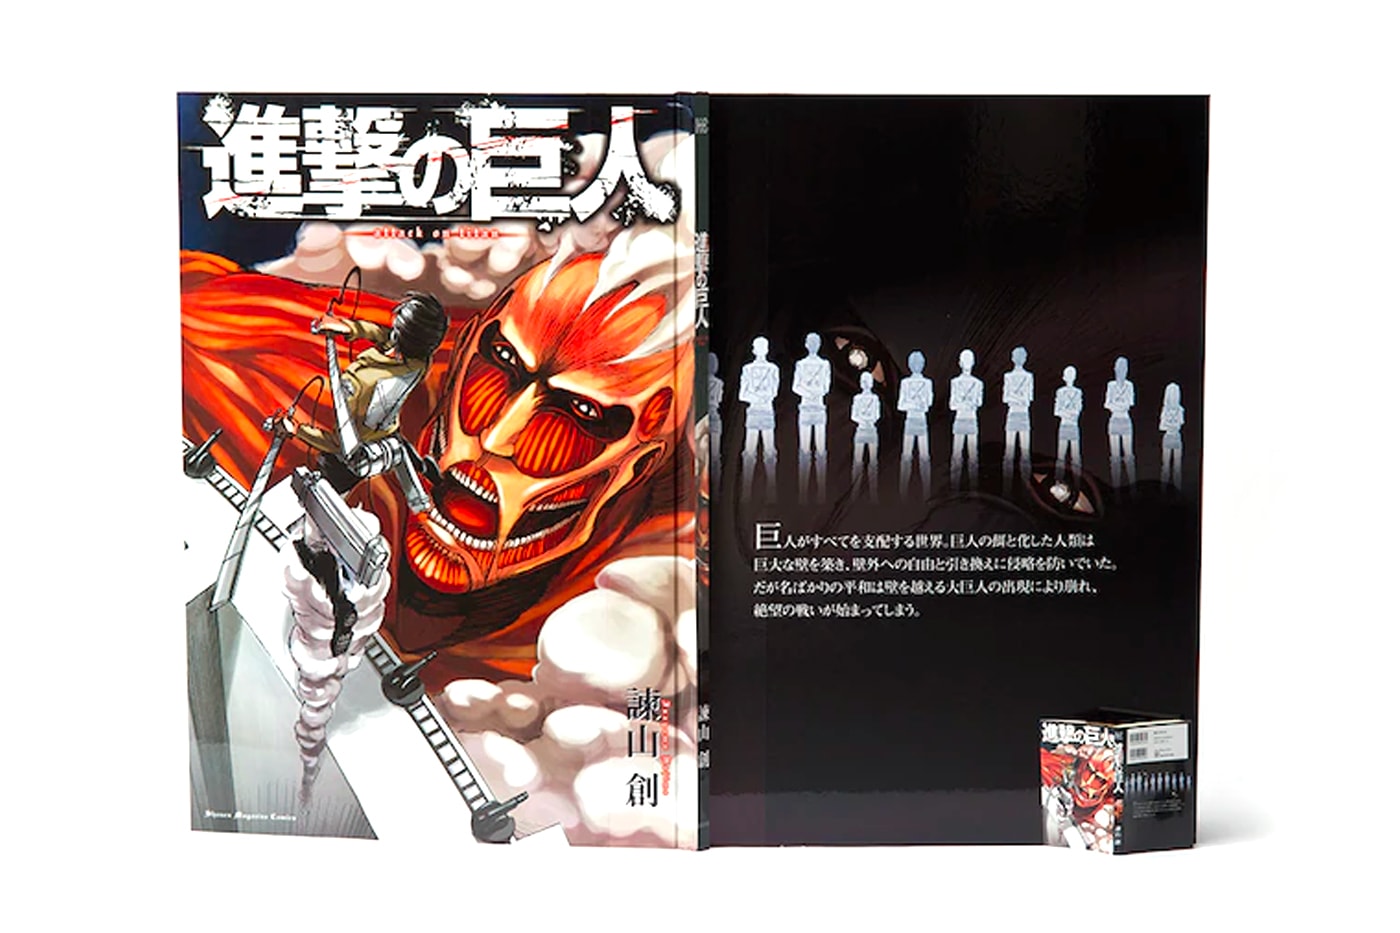 guinness world record attack on titan largest comic book manga published kodansha series artist tv shows japanese animation info